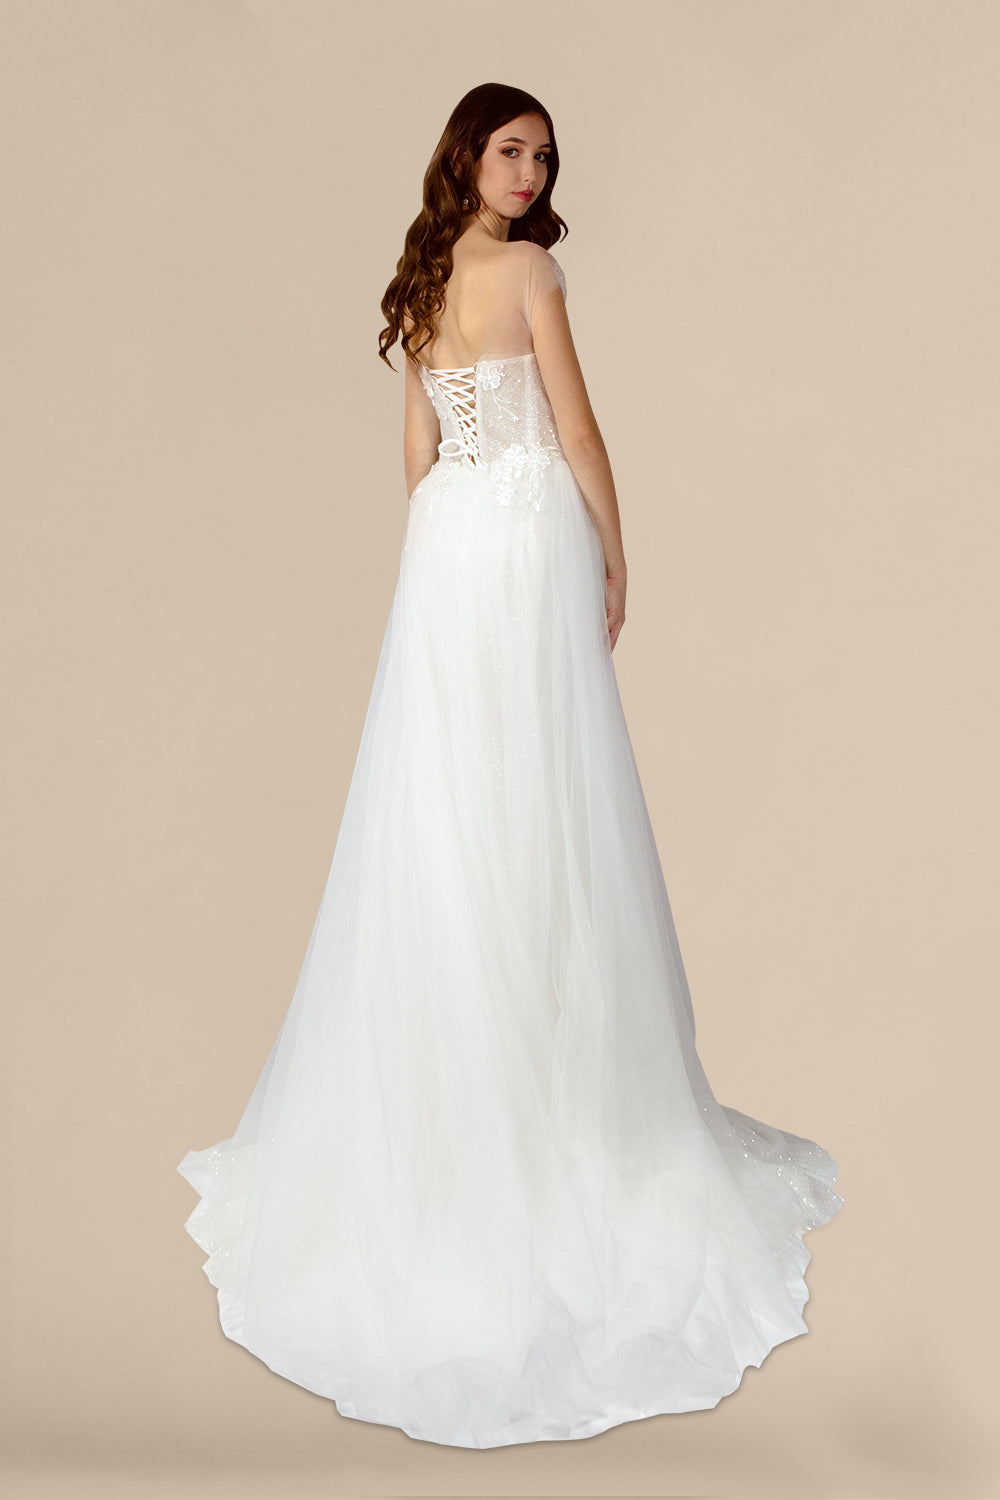 custom made wedding dresses with detachable skirts perth australia online envious bridal & formal